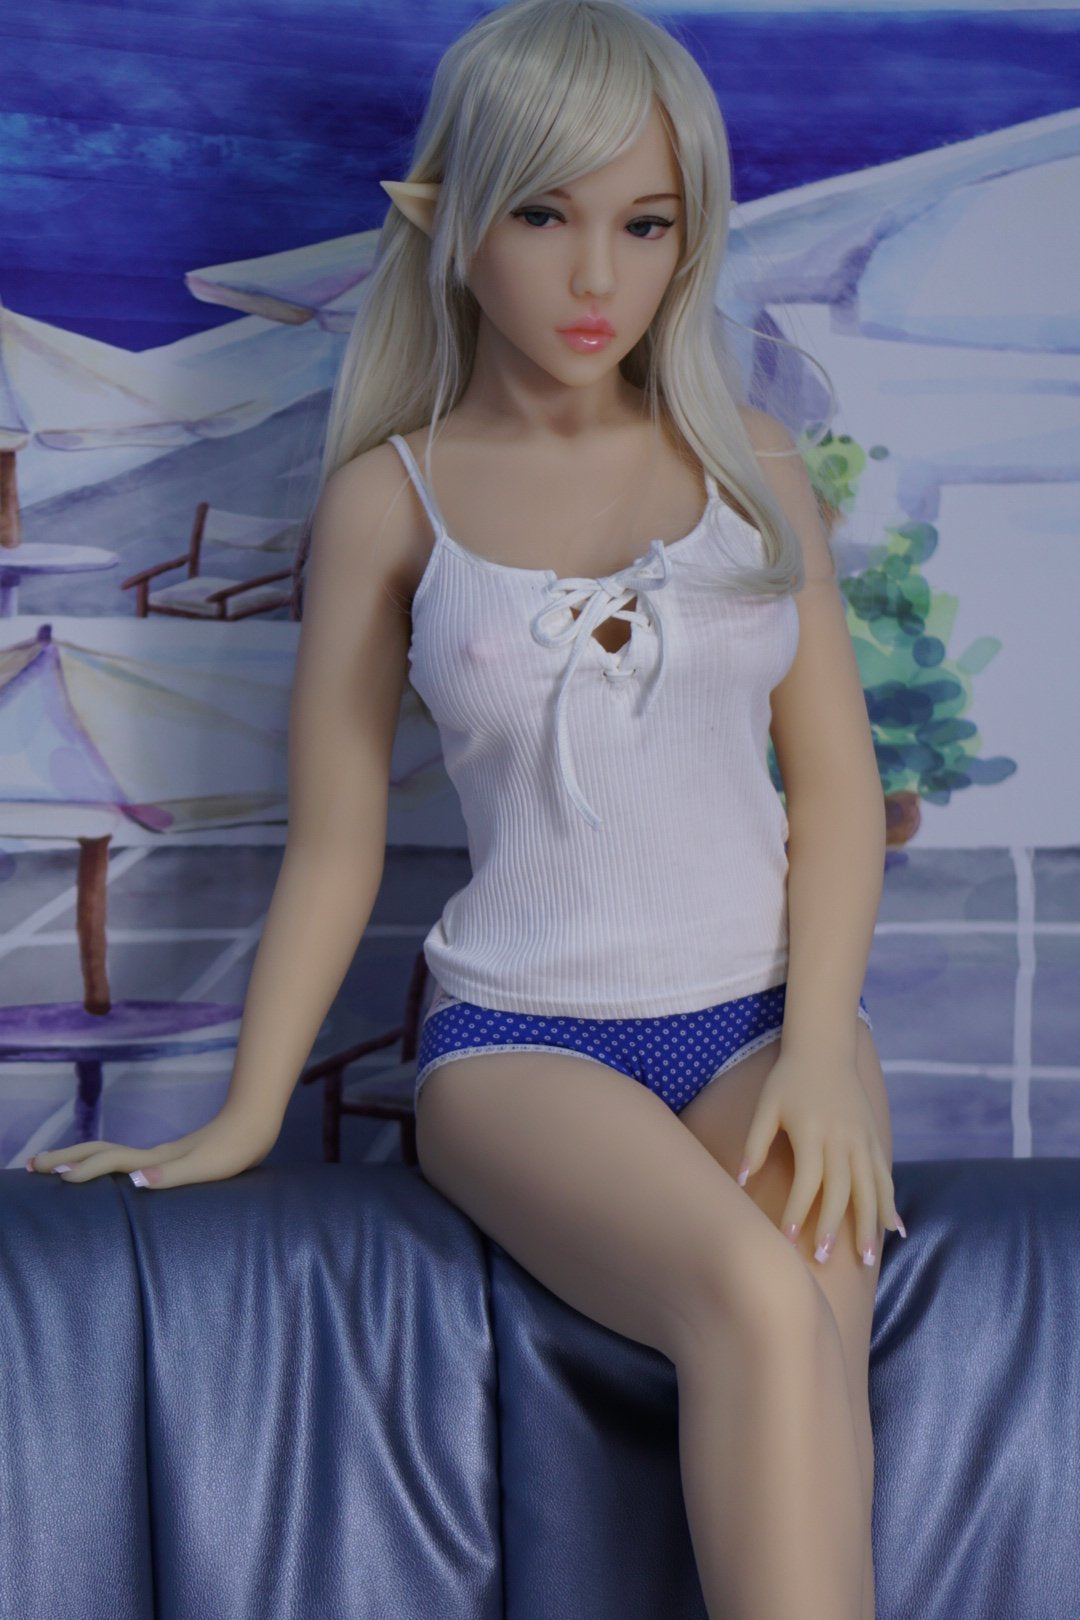 Doll Forever - Realistic Sex Doll - 4ft 9.5in (146cm) - Sienna - Love Dolls 4U